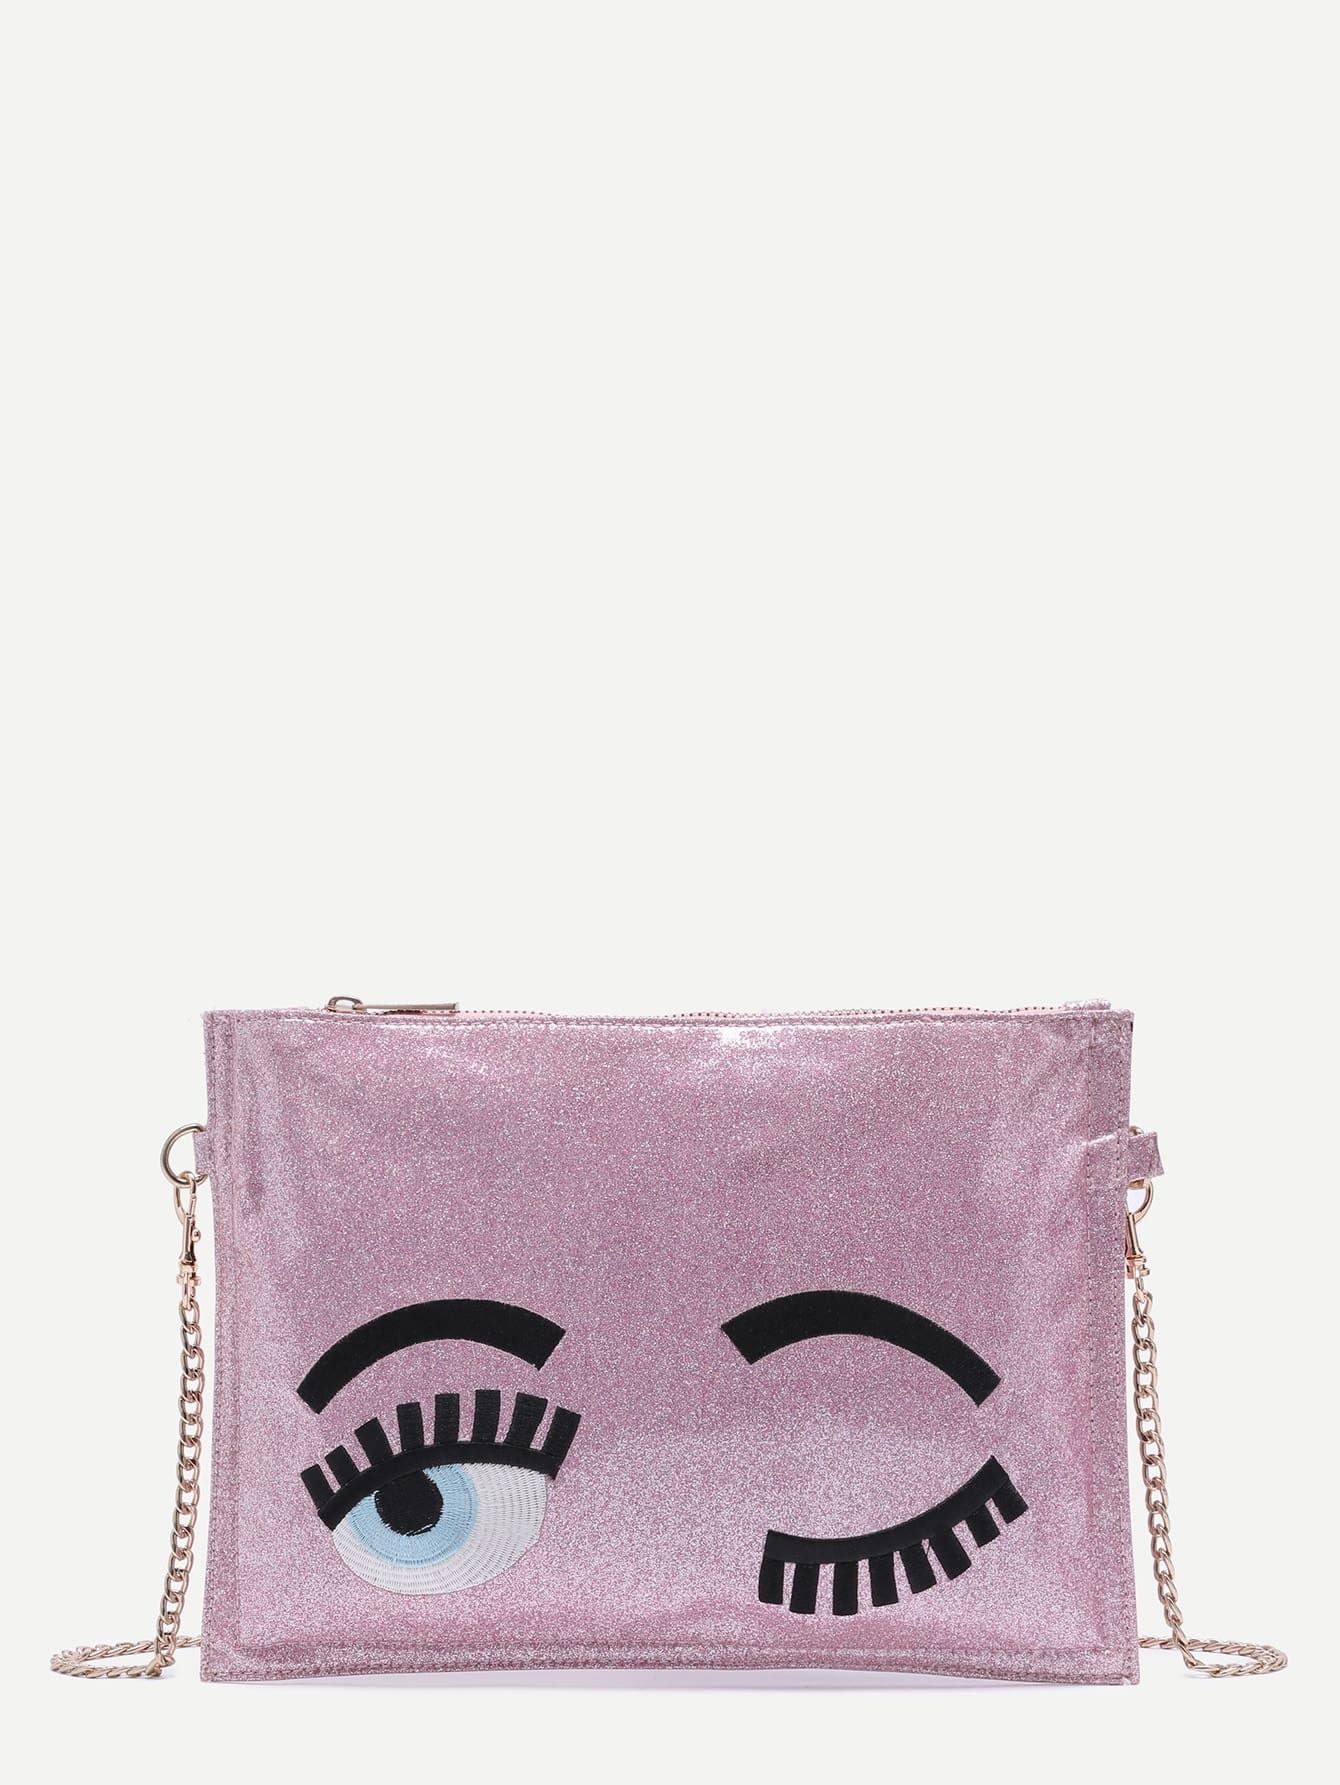 Pink Blinking Eye Glitter Sequins Clutch Bag With Chain Strap | SHEIN